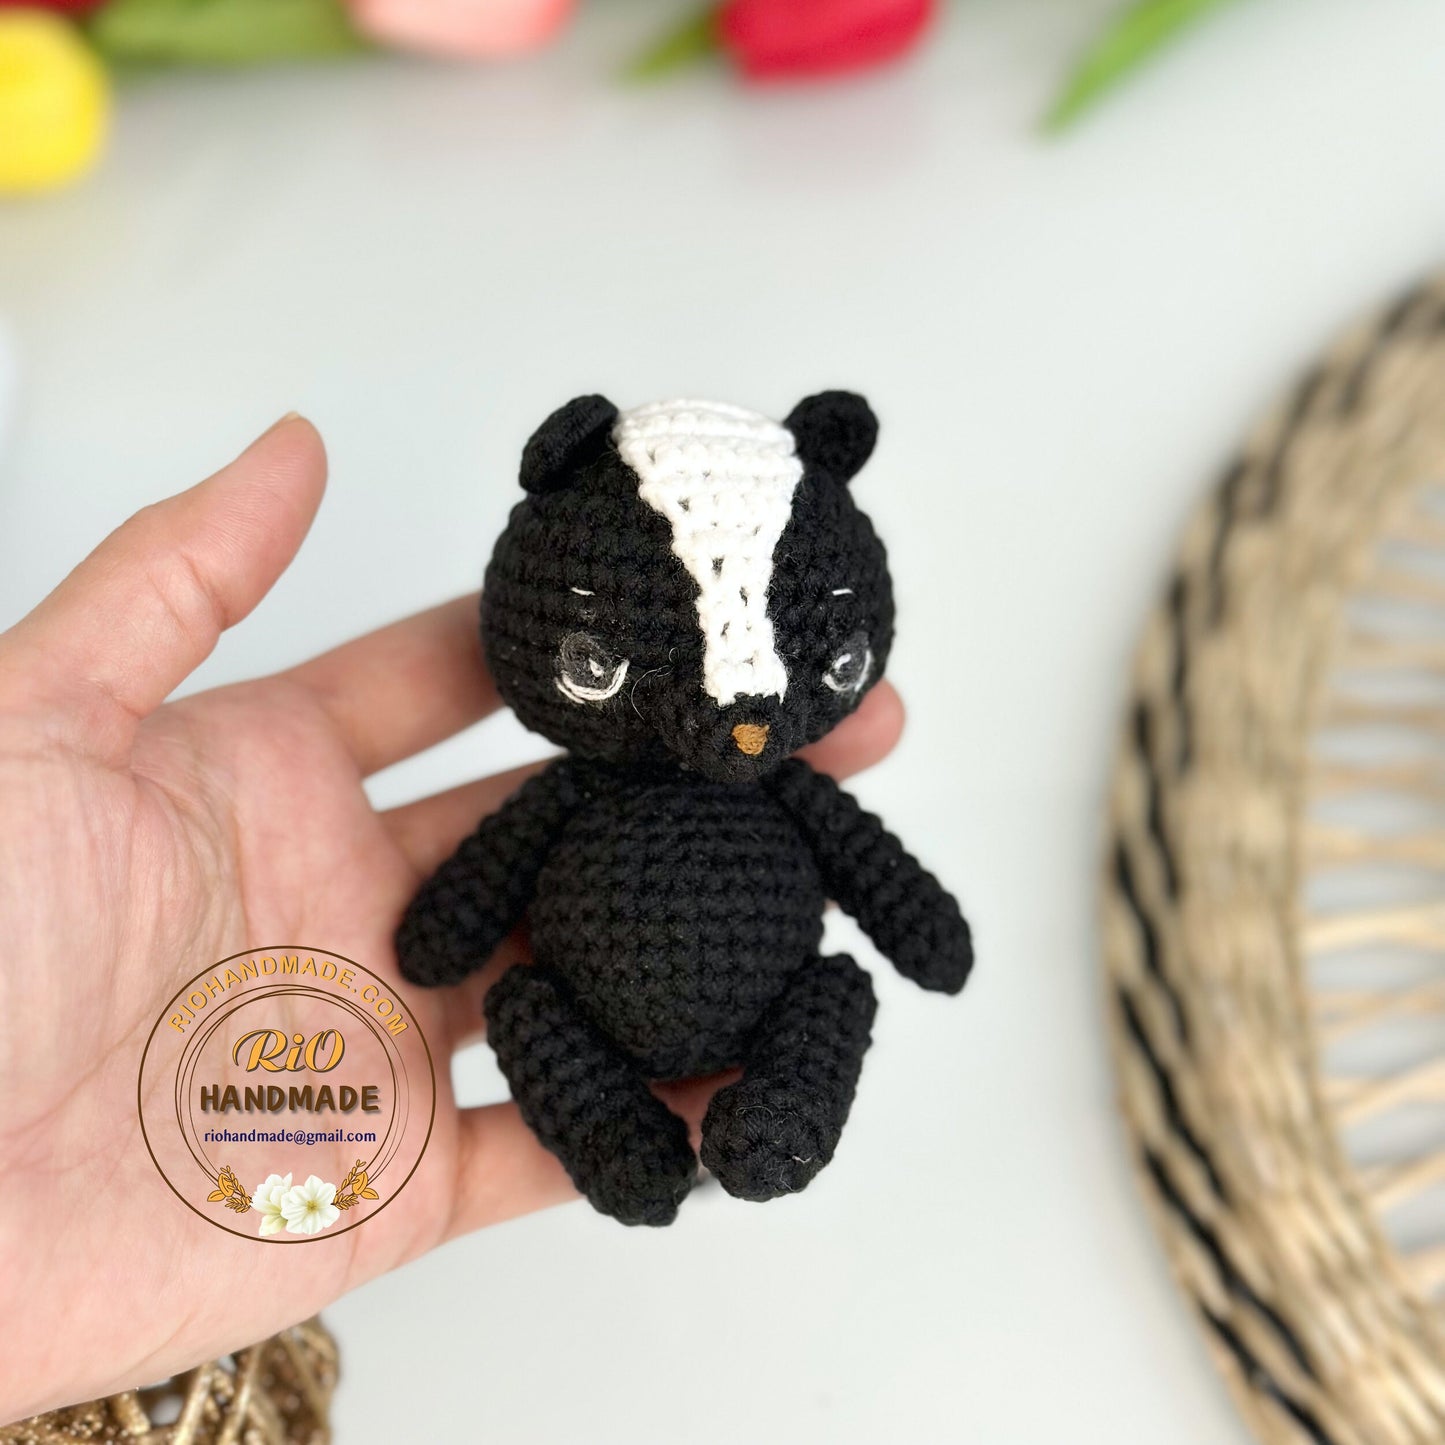 Handmade Woodland Baby Toy, Crochet Forest Animals, Amigurumi Fox, Bear, Bunny, Owl, Raccoon, Soft Toy For Baby, Kid, Adult Hobby